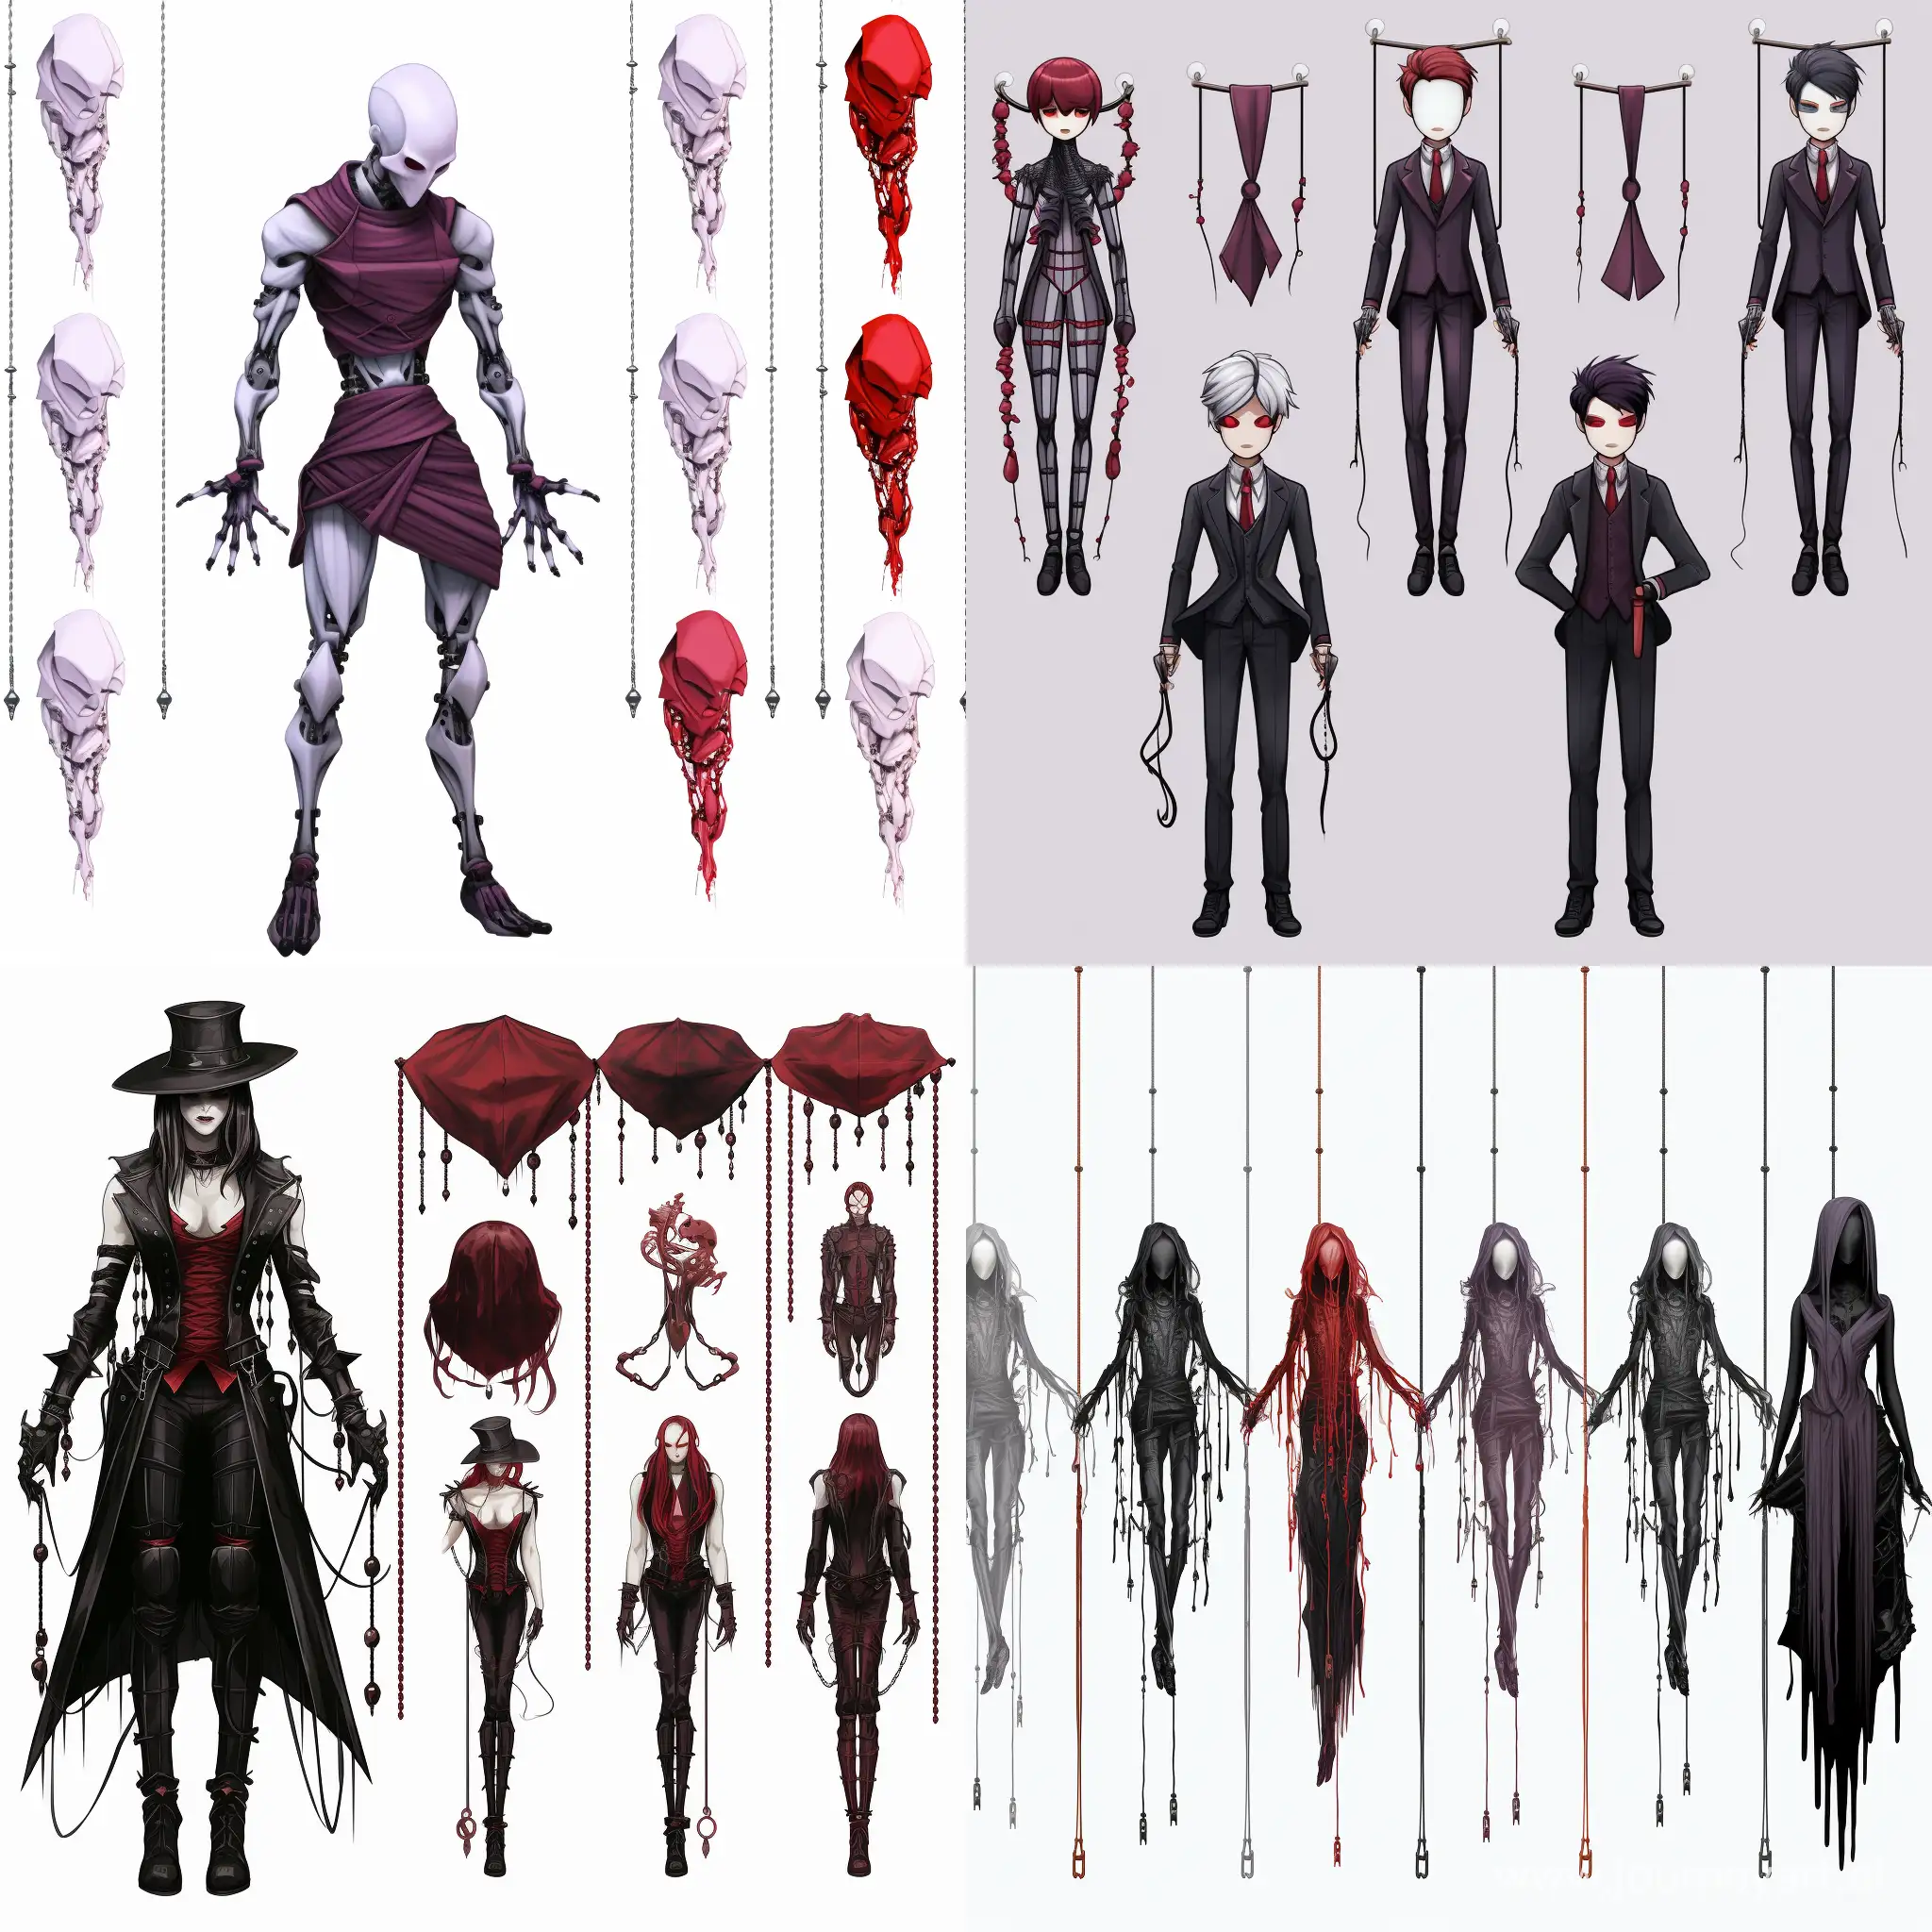 item spritesheet, light realistic fantsy marionette  only black red white purple colors